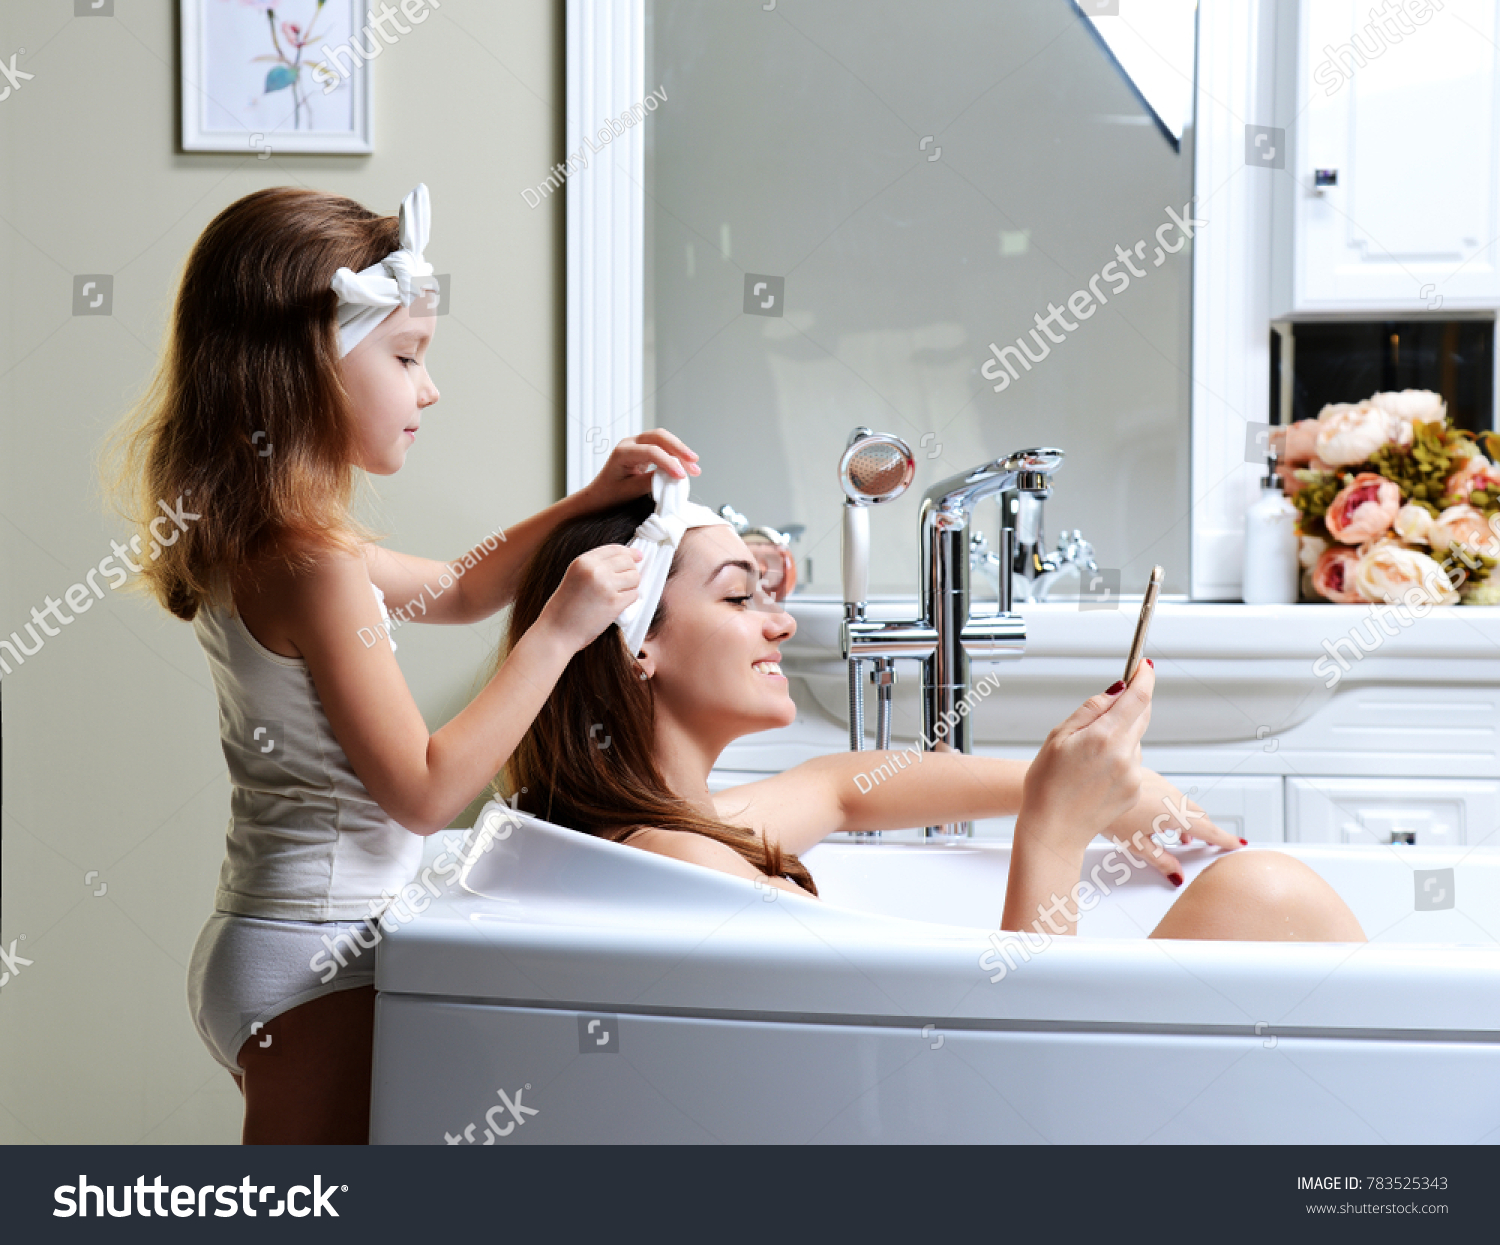 Young Mother Daughter Bathroom Bath Tub: стоковые изображения в HD и миллио...